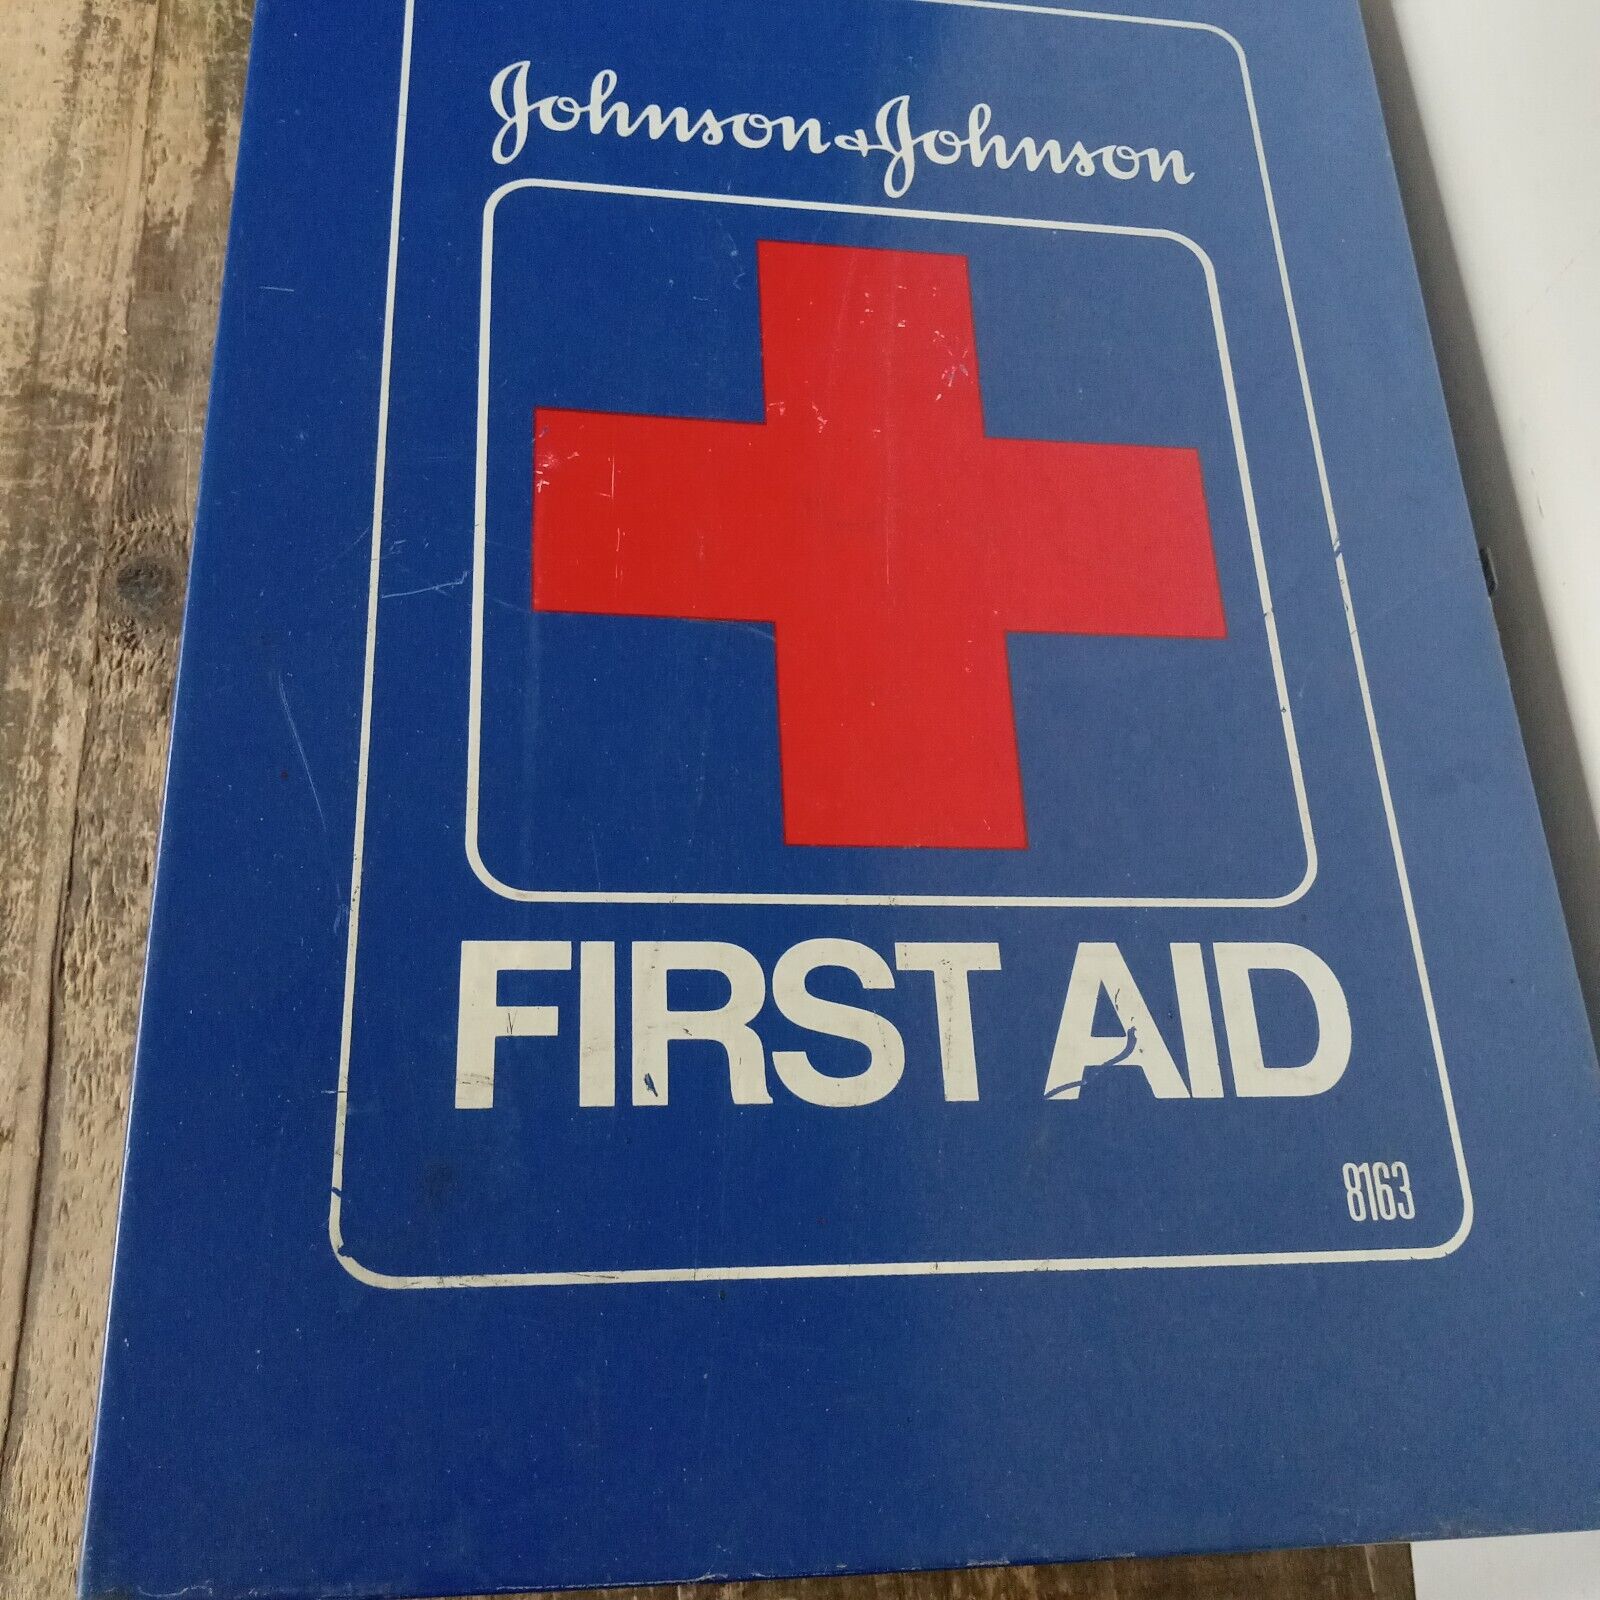 1990 Industrial Metal 8163 Johnson &Johnson Emergency First Aid Kit 15x10.5x4.75